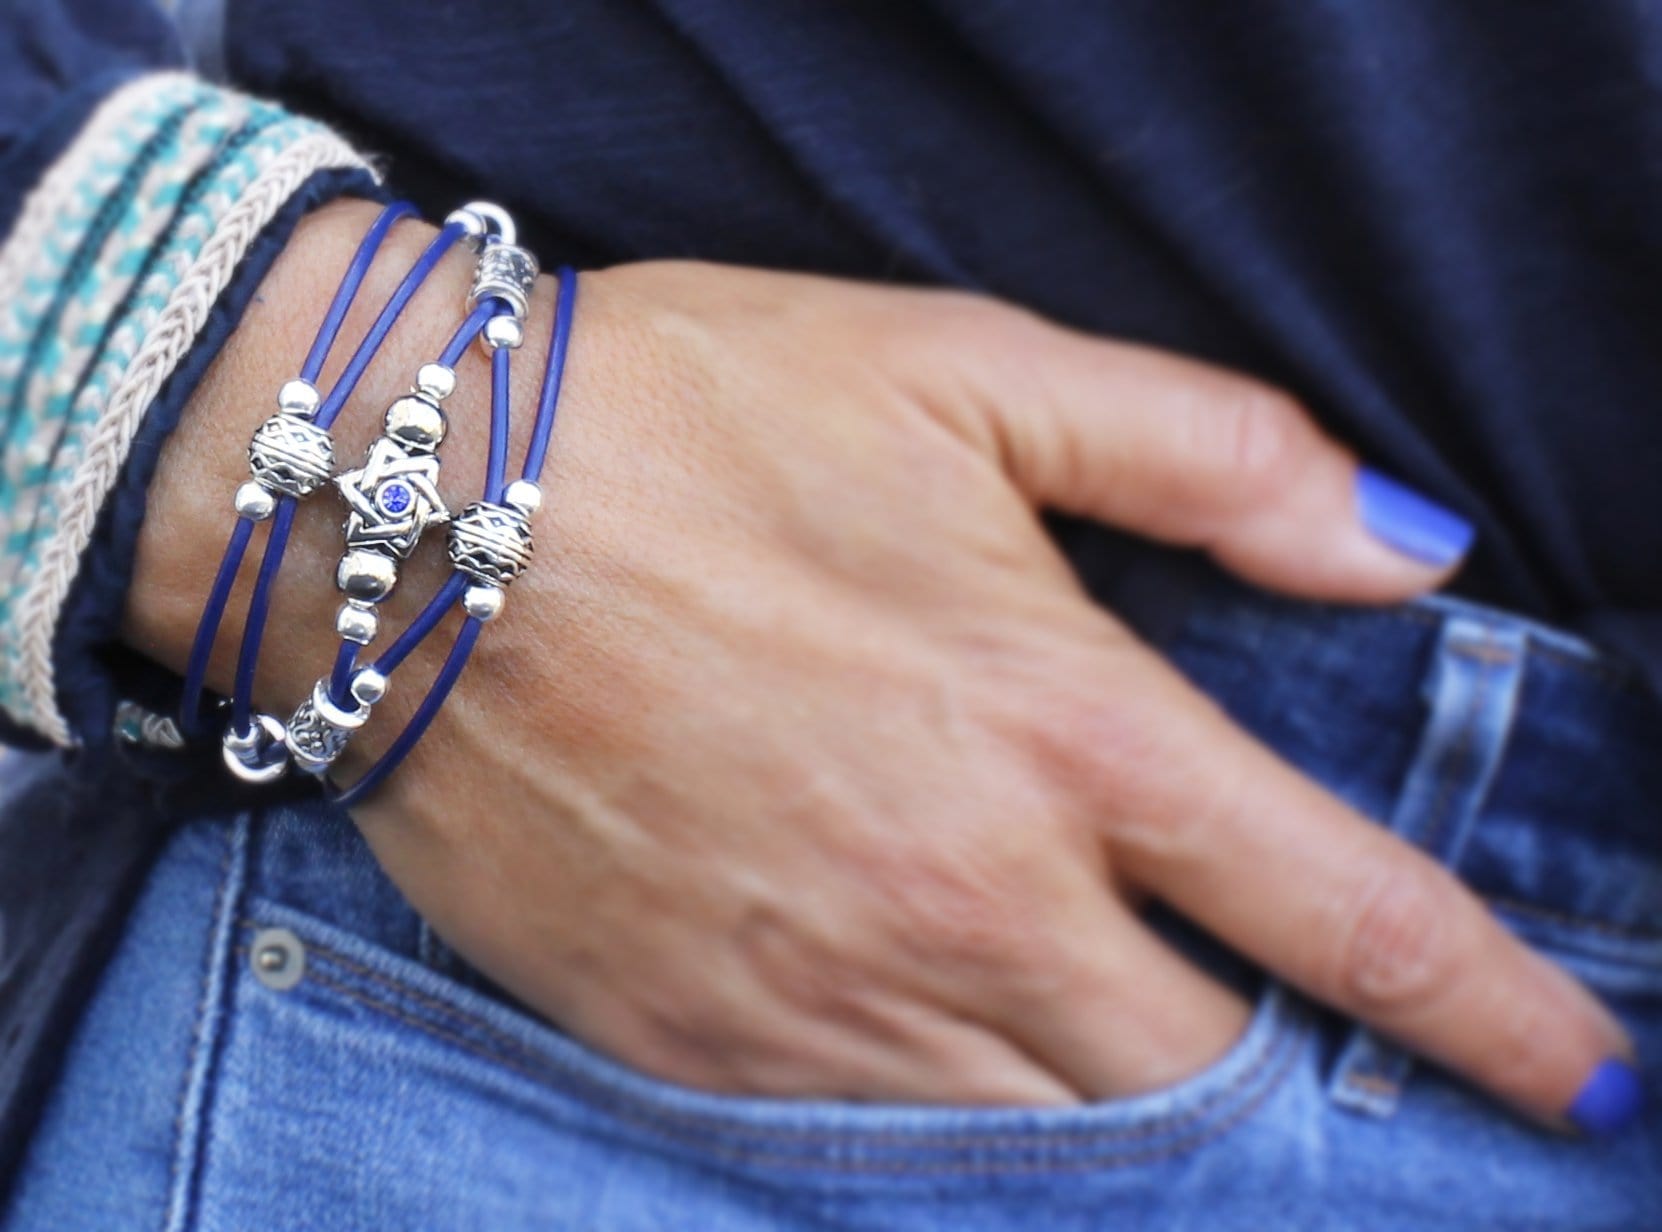 Swarovski Star of David Beaded Leather Bracelet - Blue